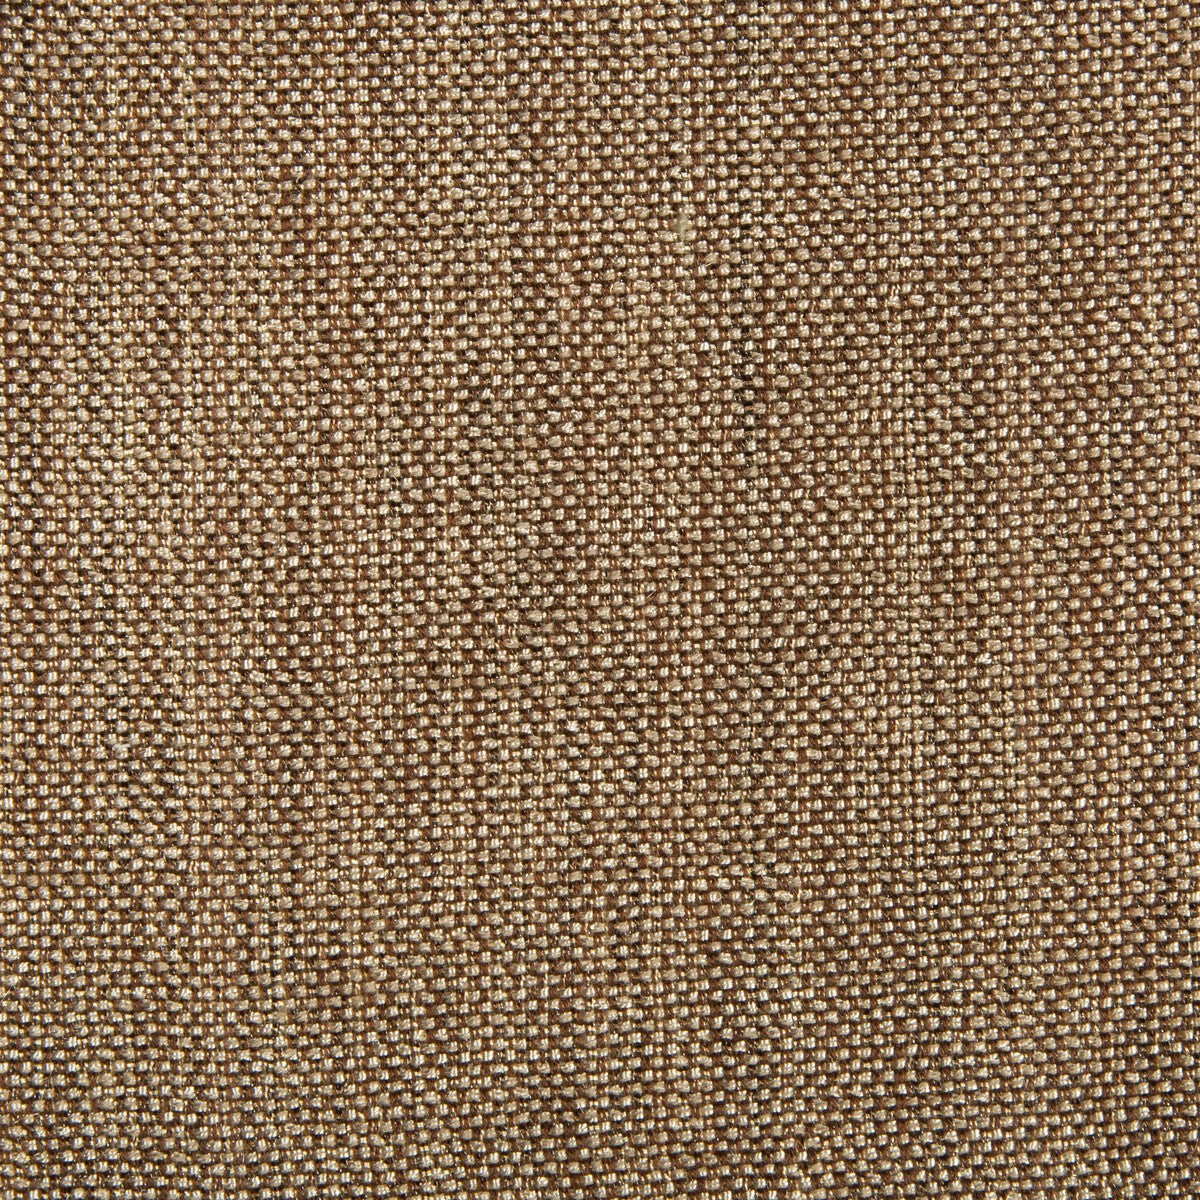 Kravet Smart fabric in 34939-606 color - pattern 34939.606.0 - by Kravet Smart